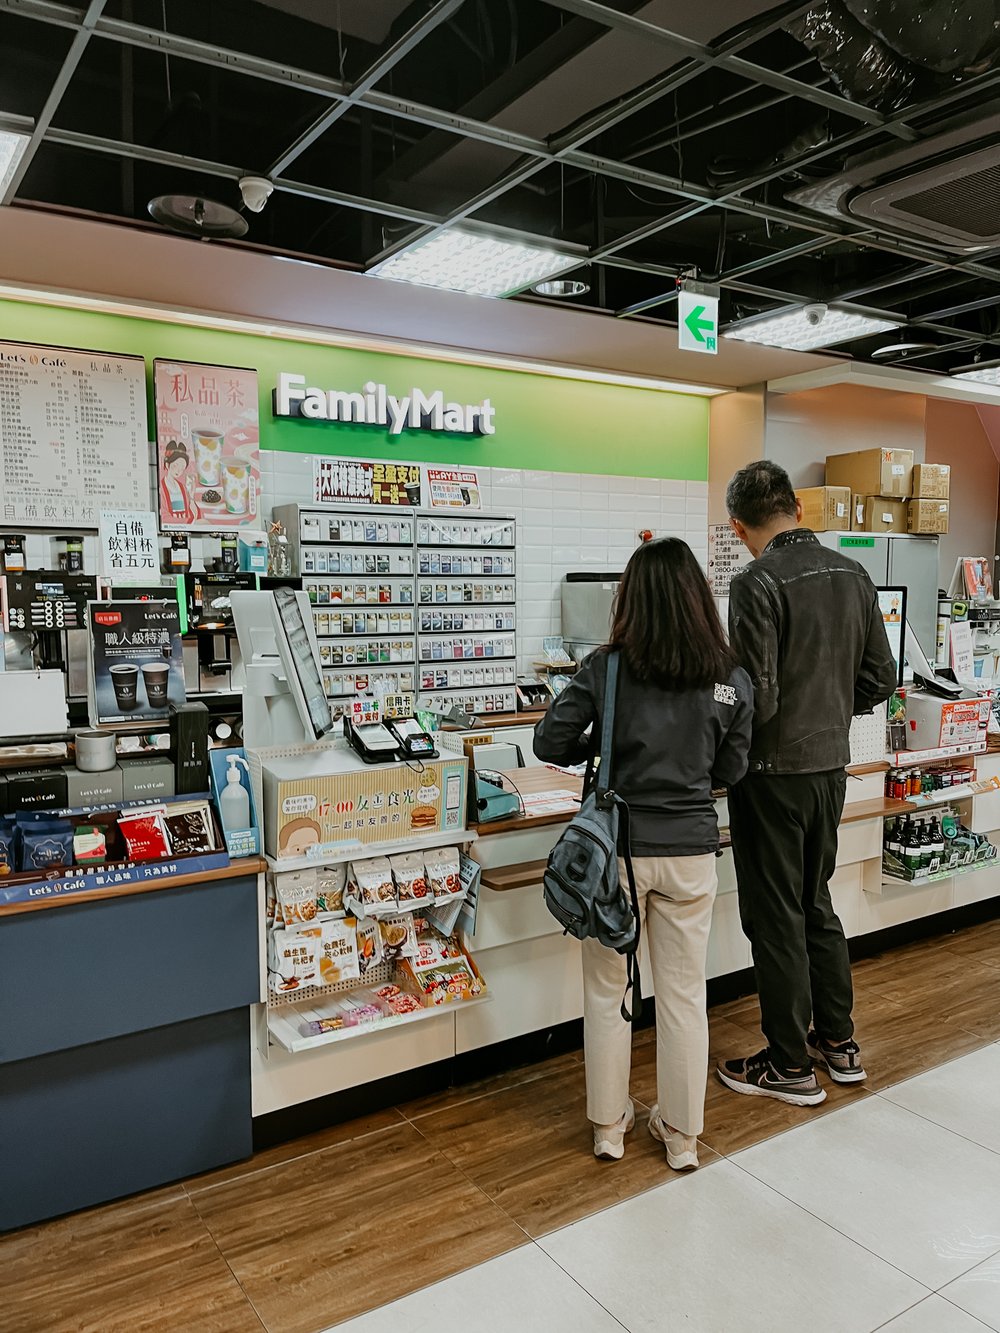  parents paying their utilities at FamilyMart 